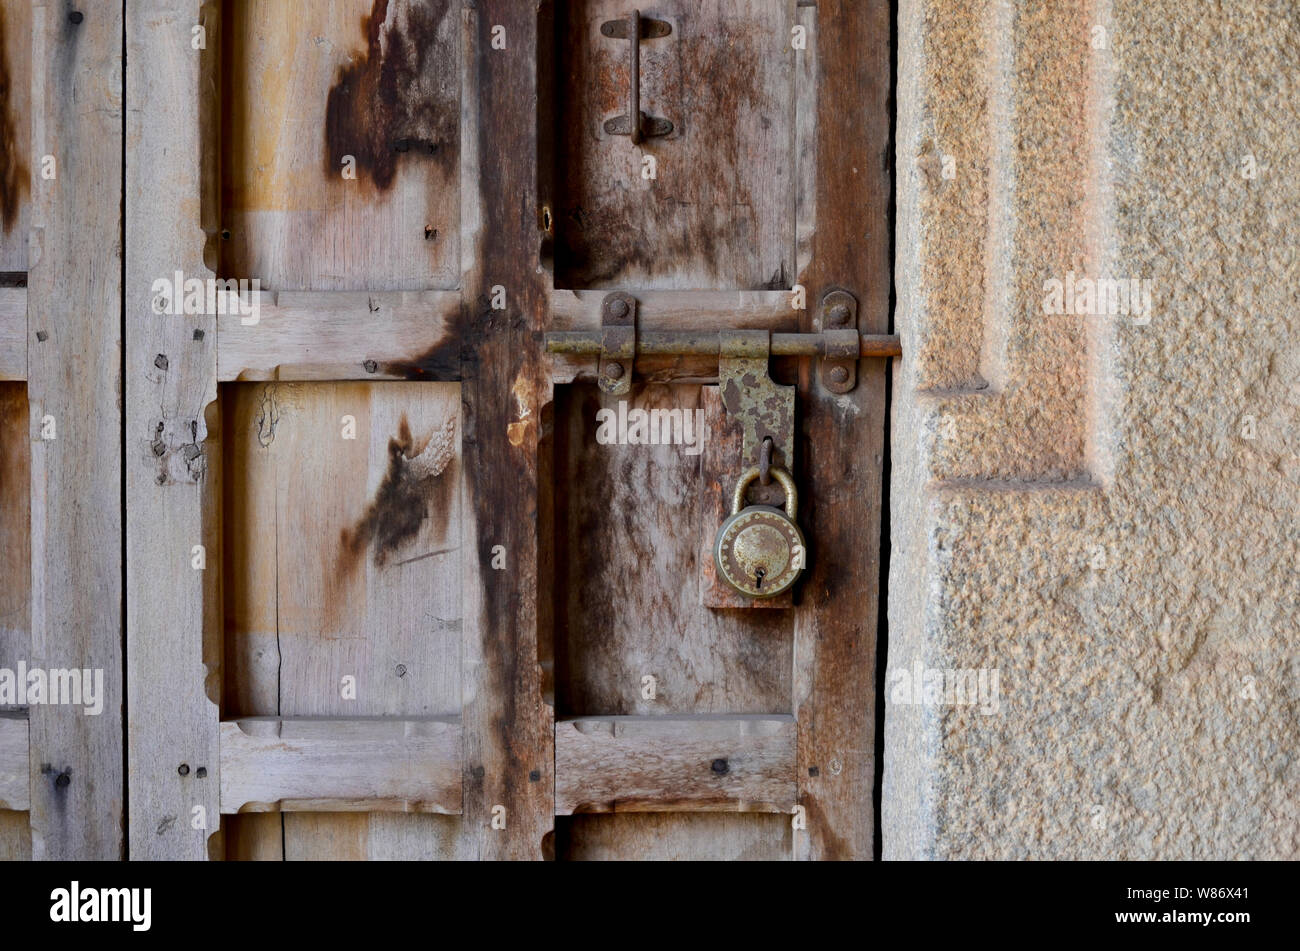 Old doors with padlocks Stock Photo